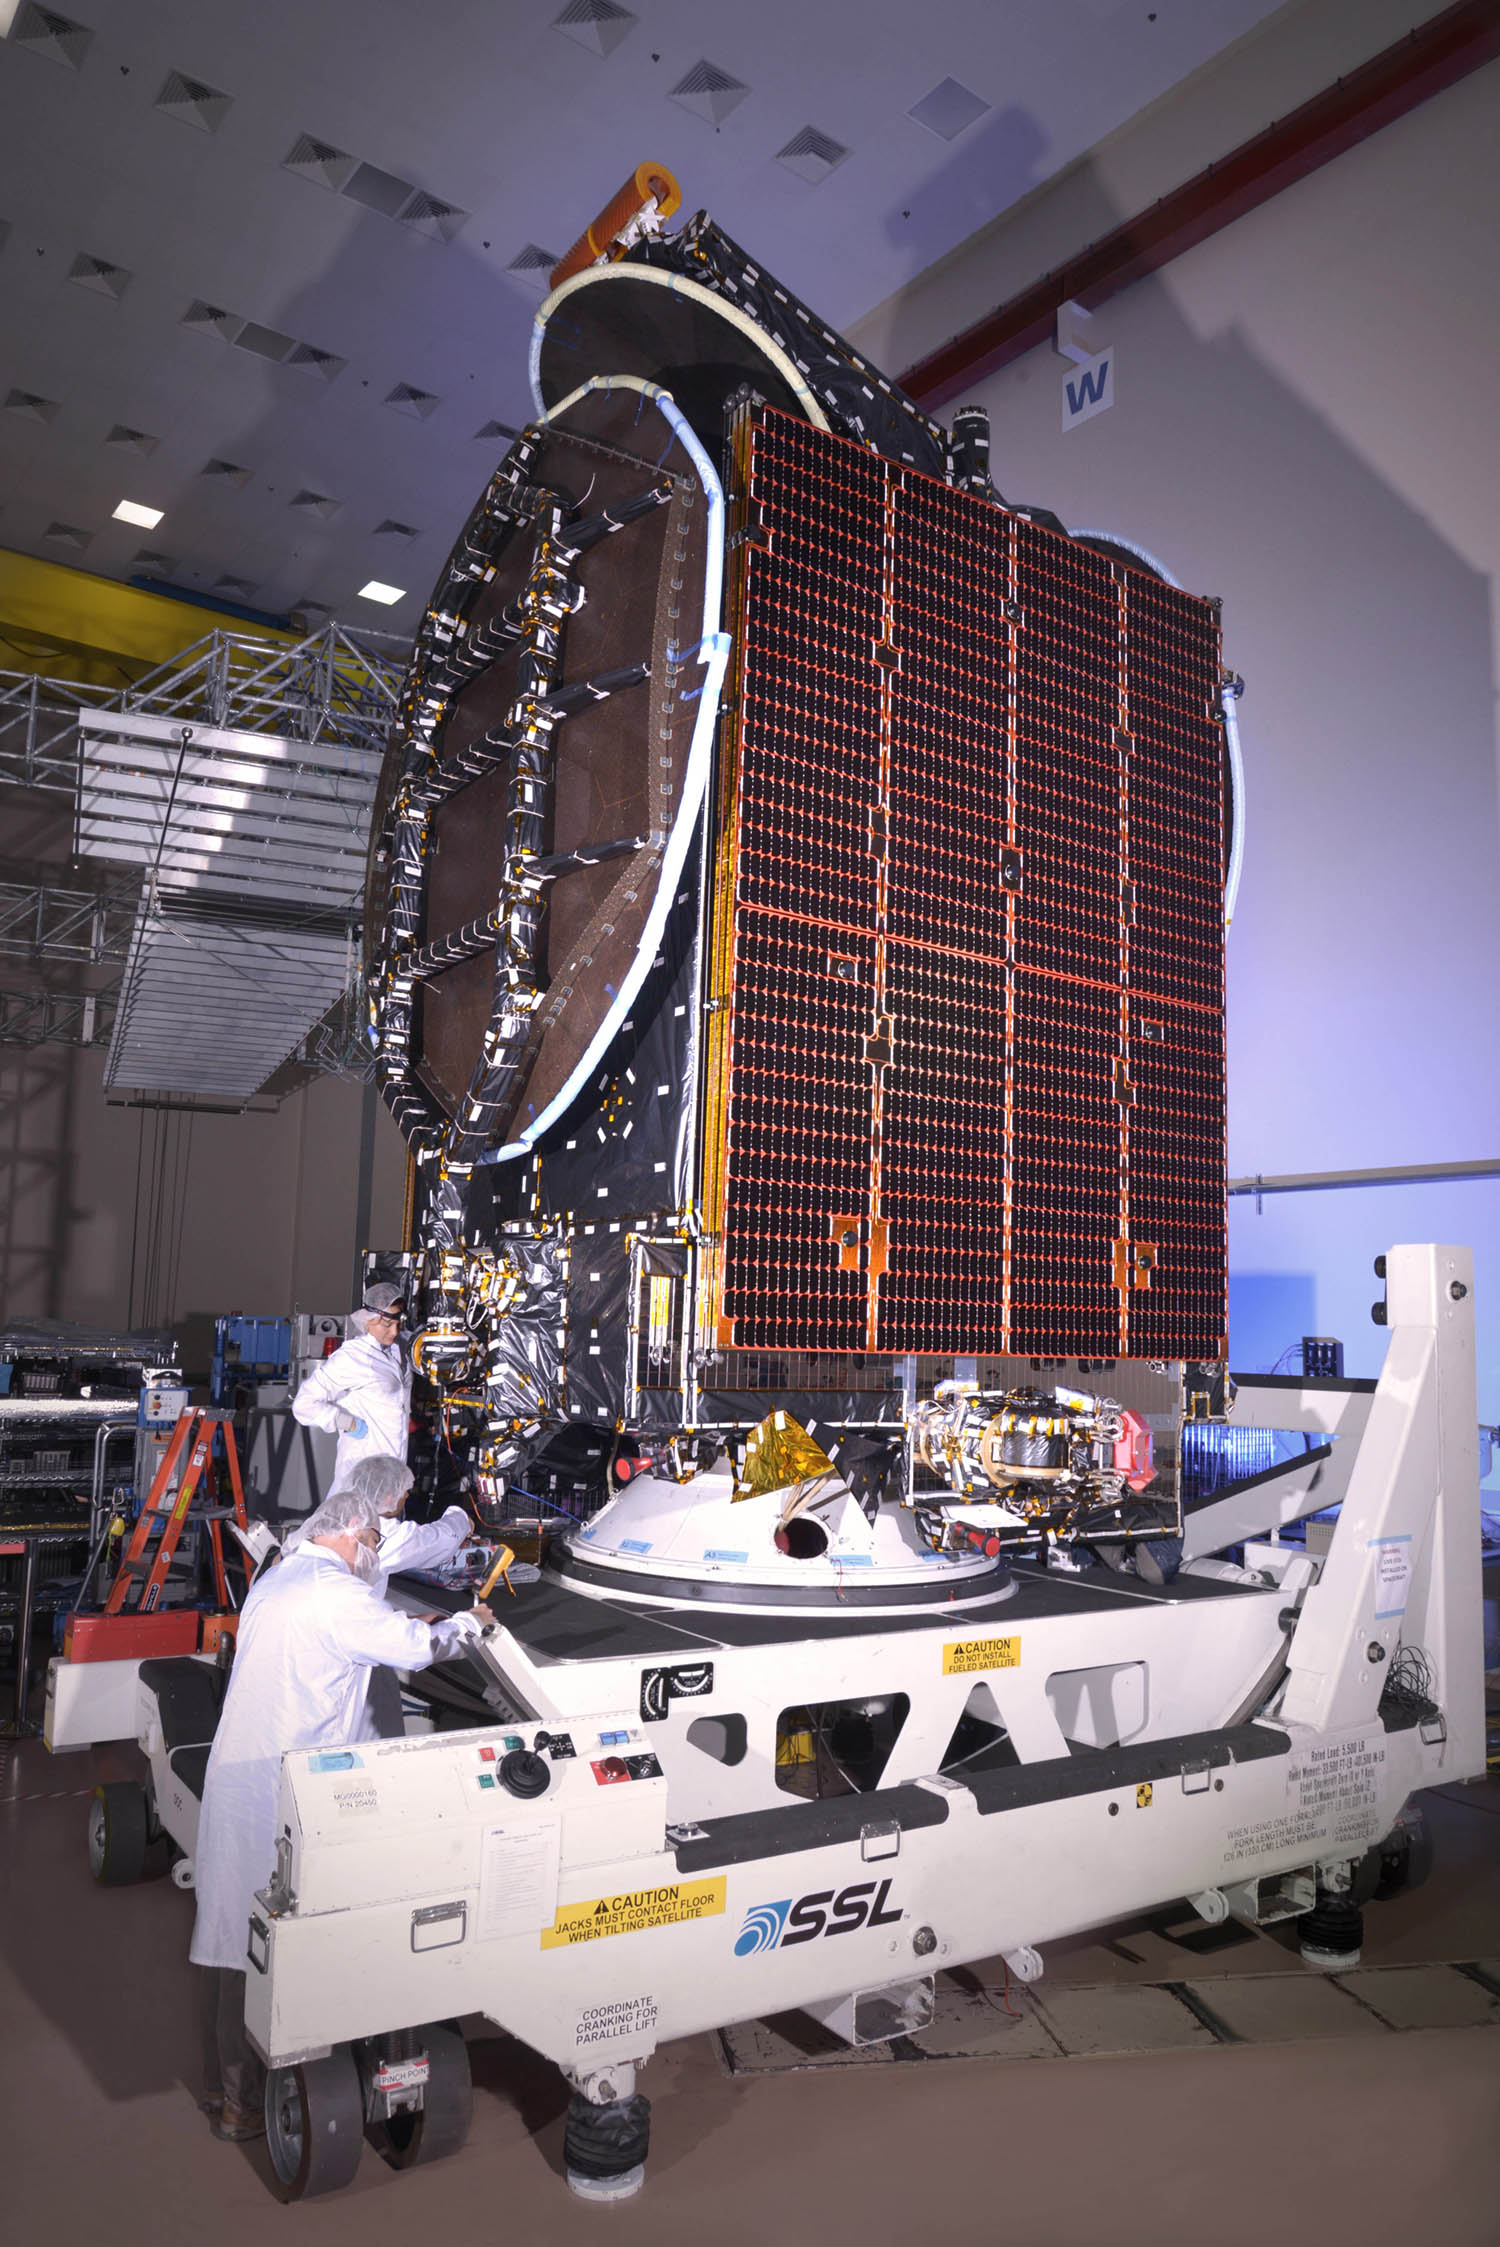 The Intelsat 34 satellite built by SSL